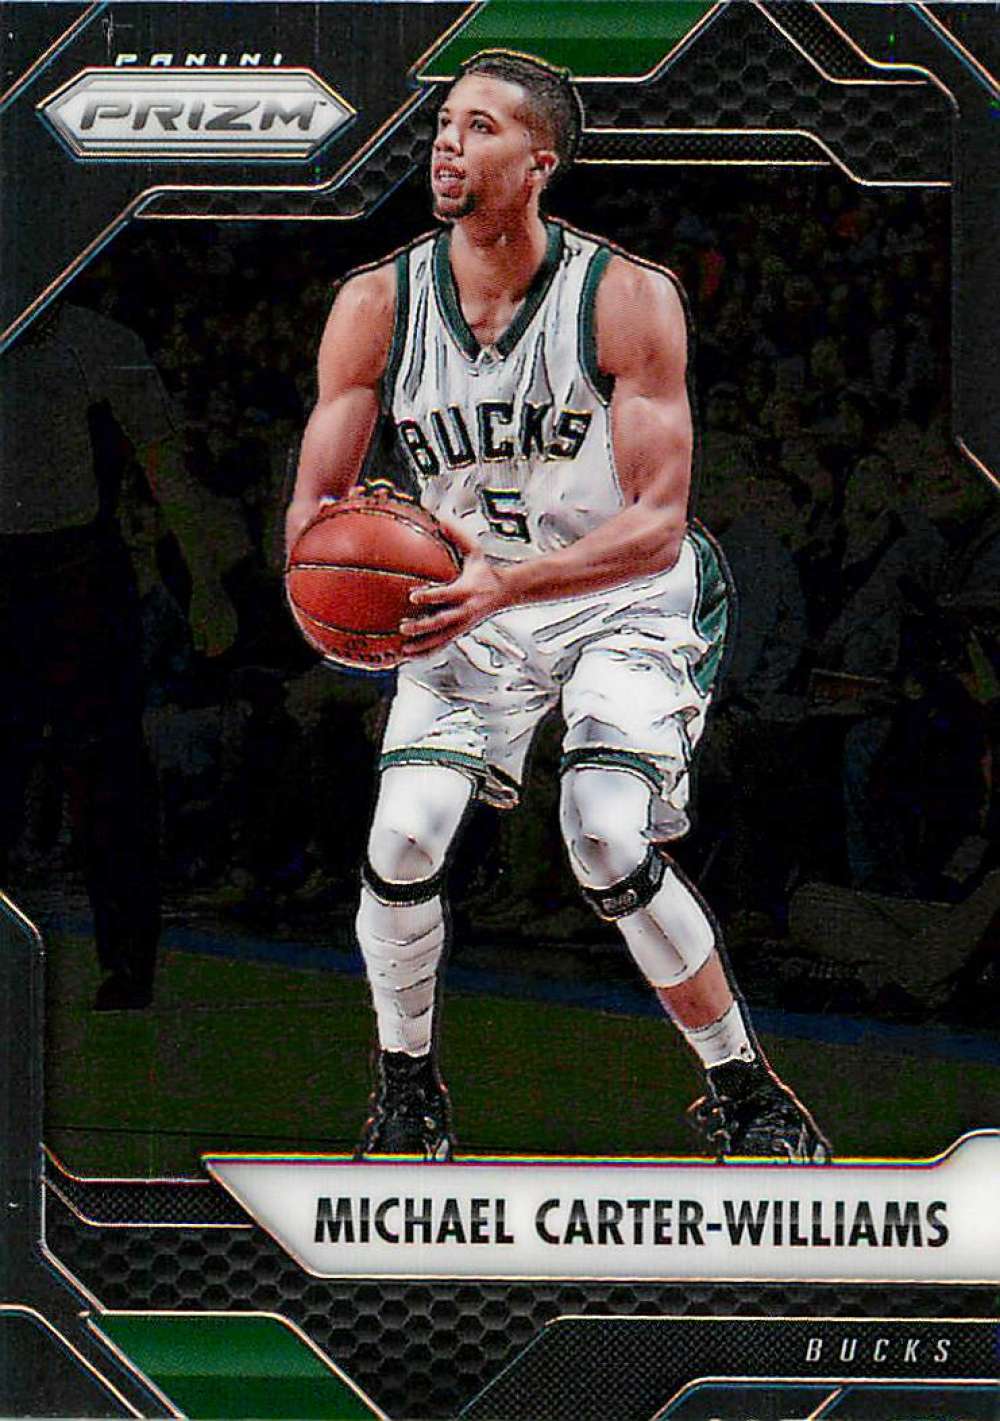 2016-17 Panini Prizm Basketball #19 Michael Carter-Williams Milwaukee Bucks Official NBA Trading Card